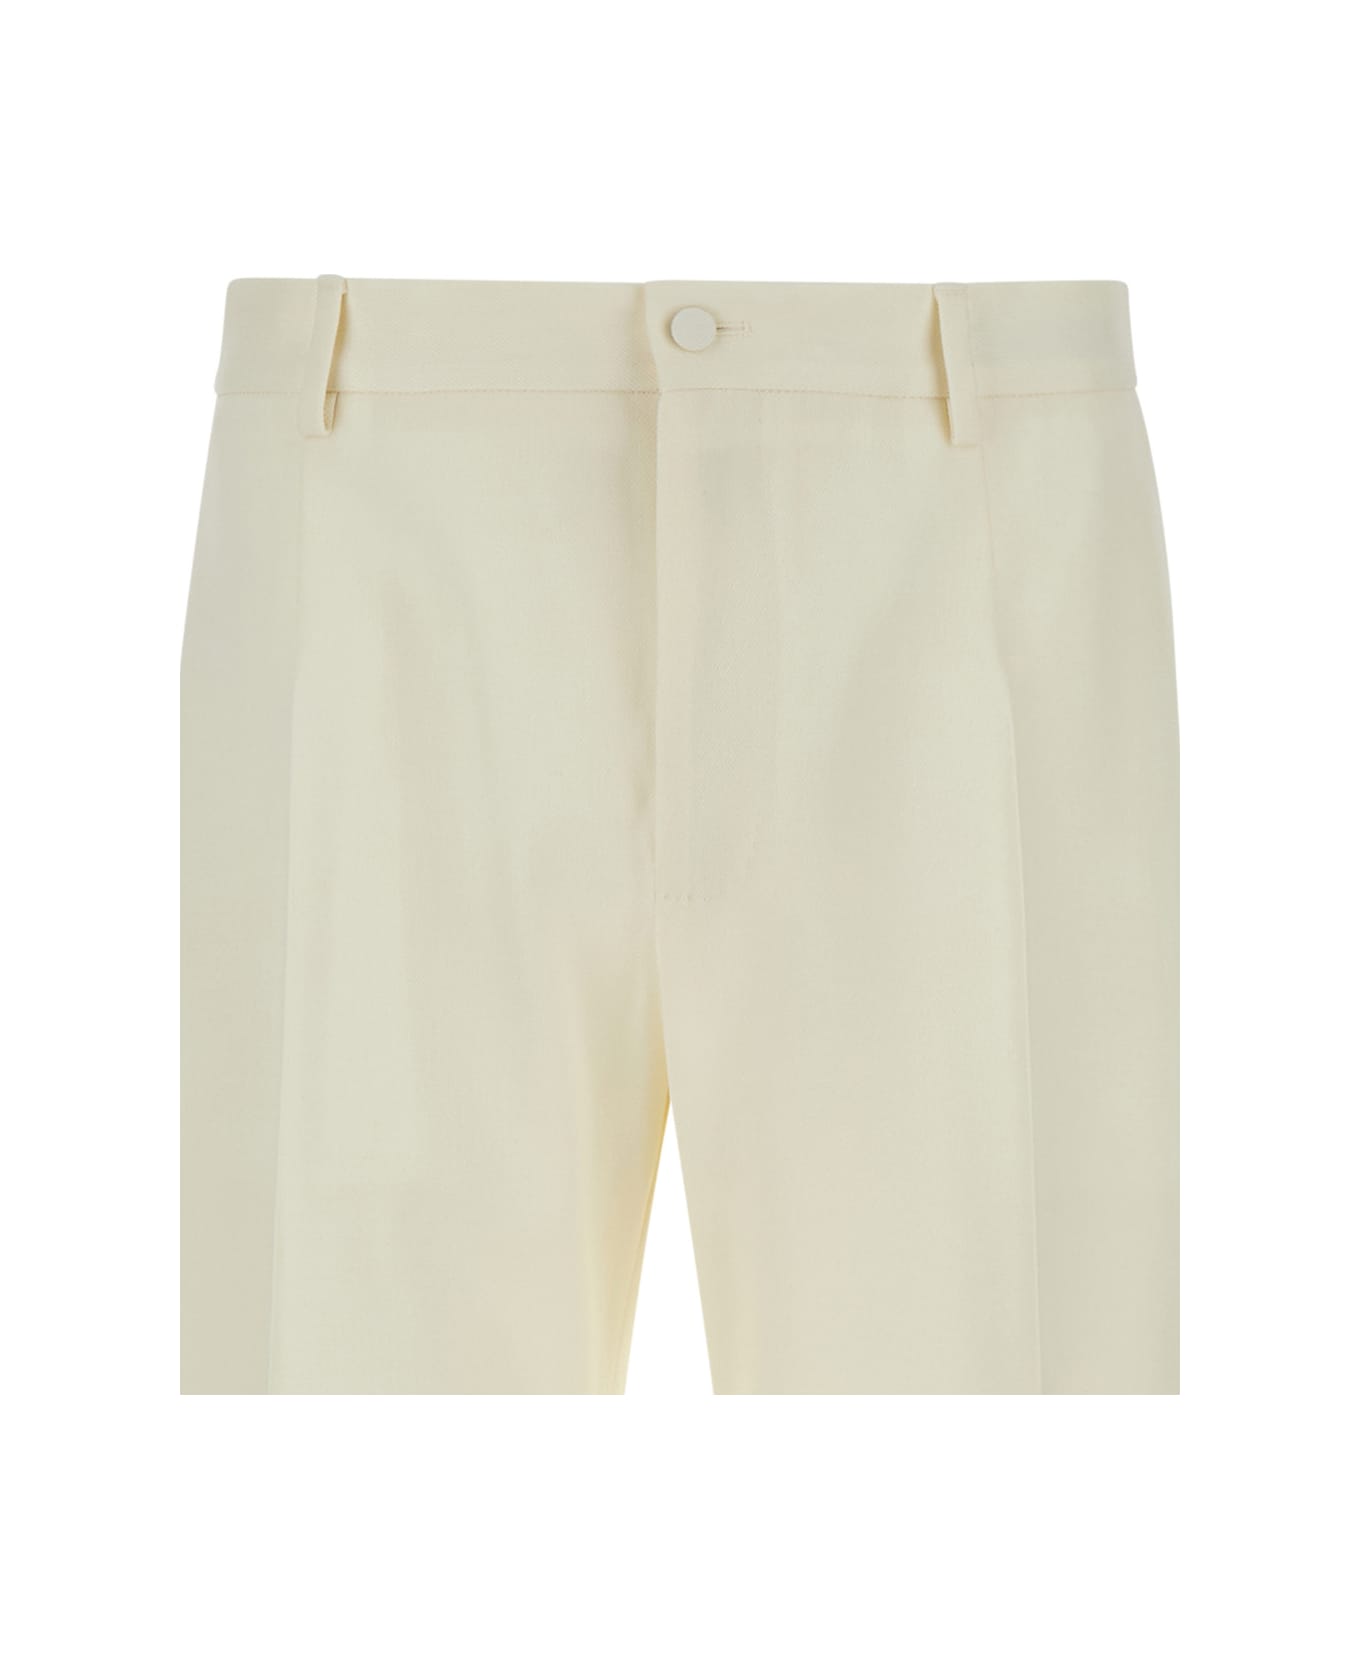 Dolce & Gabbana Look 24 Pantalone - Bianco naturale